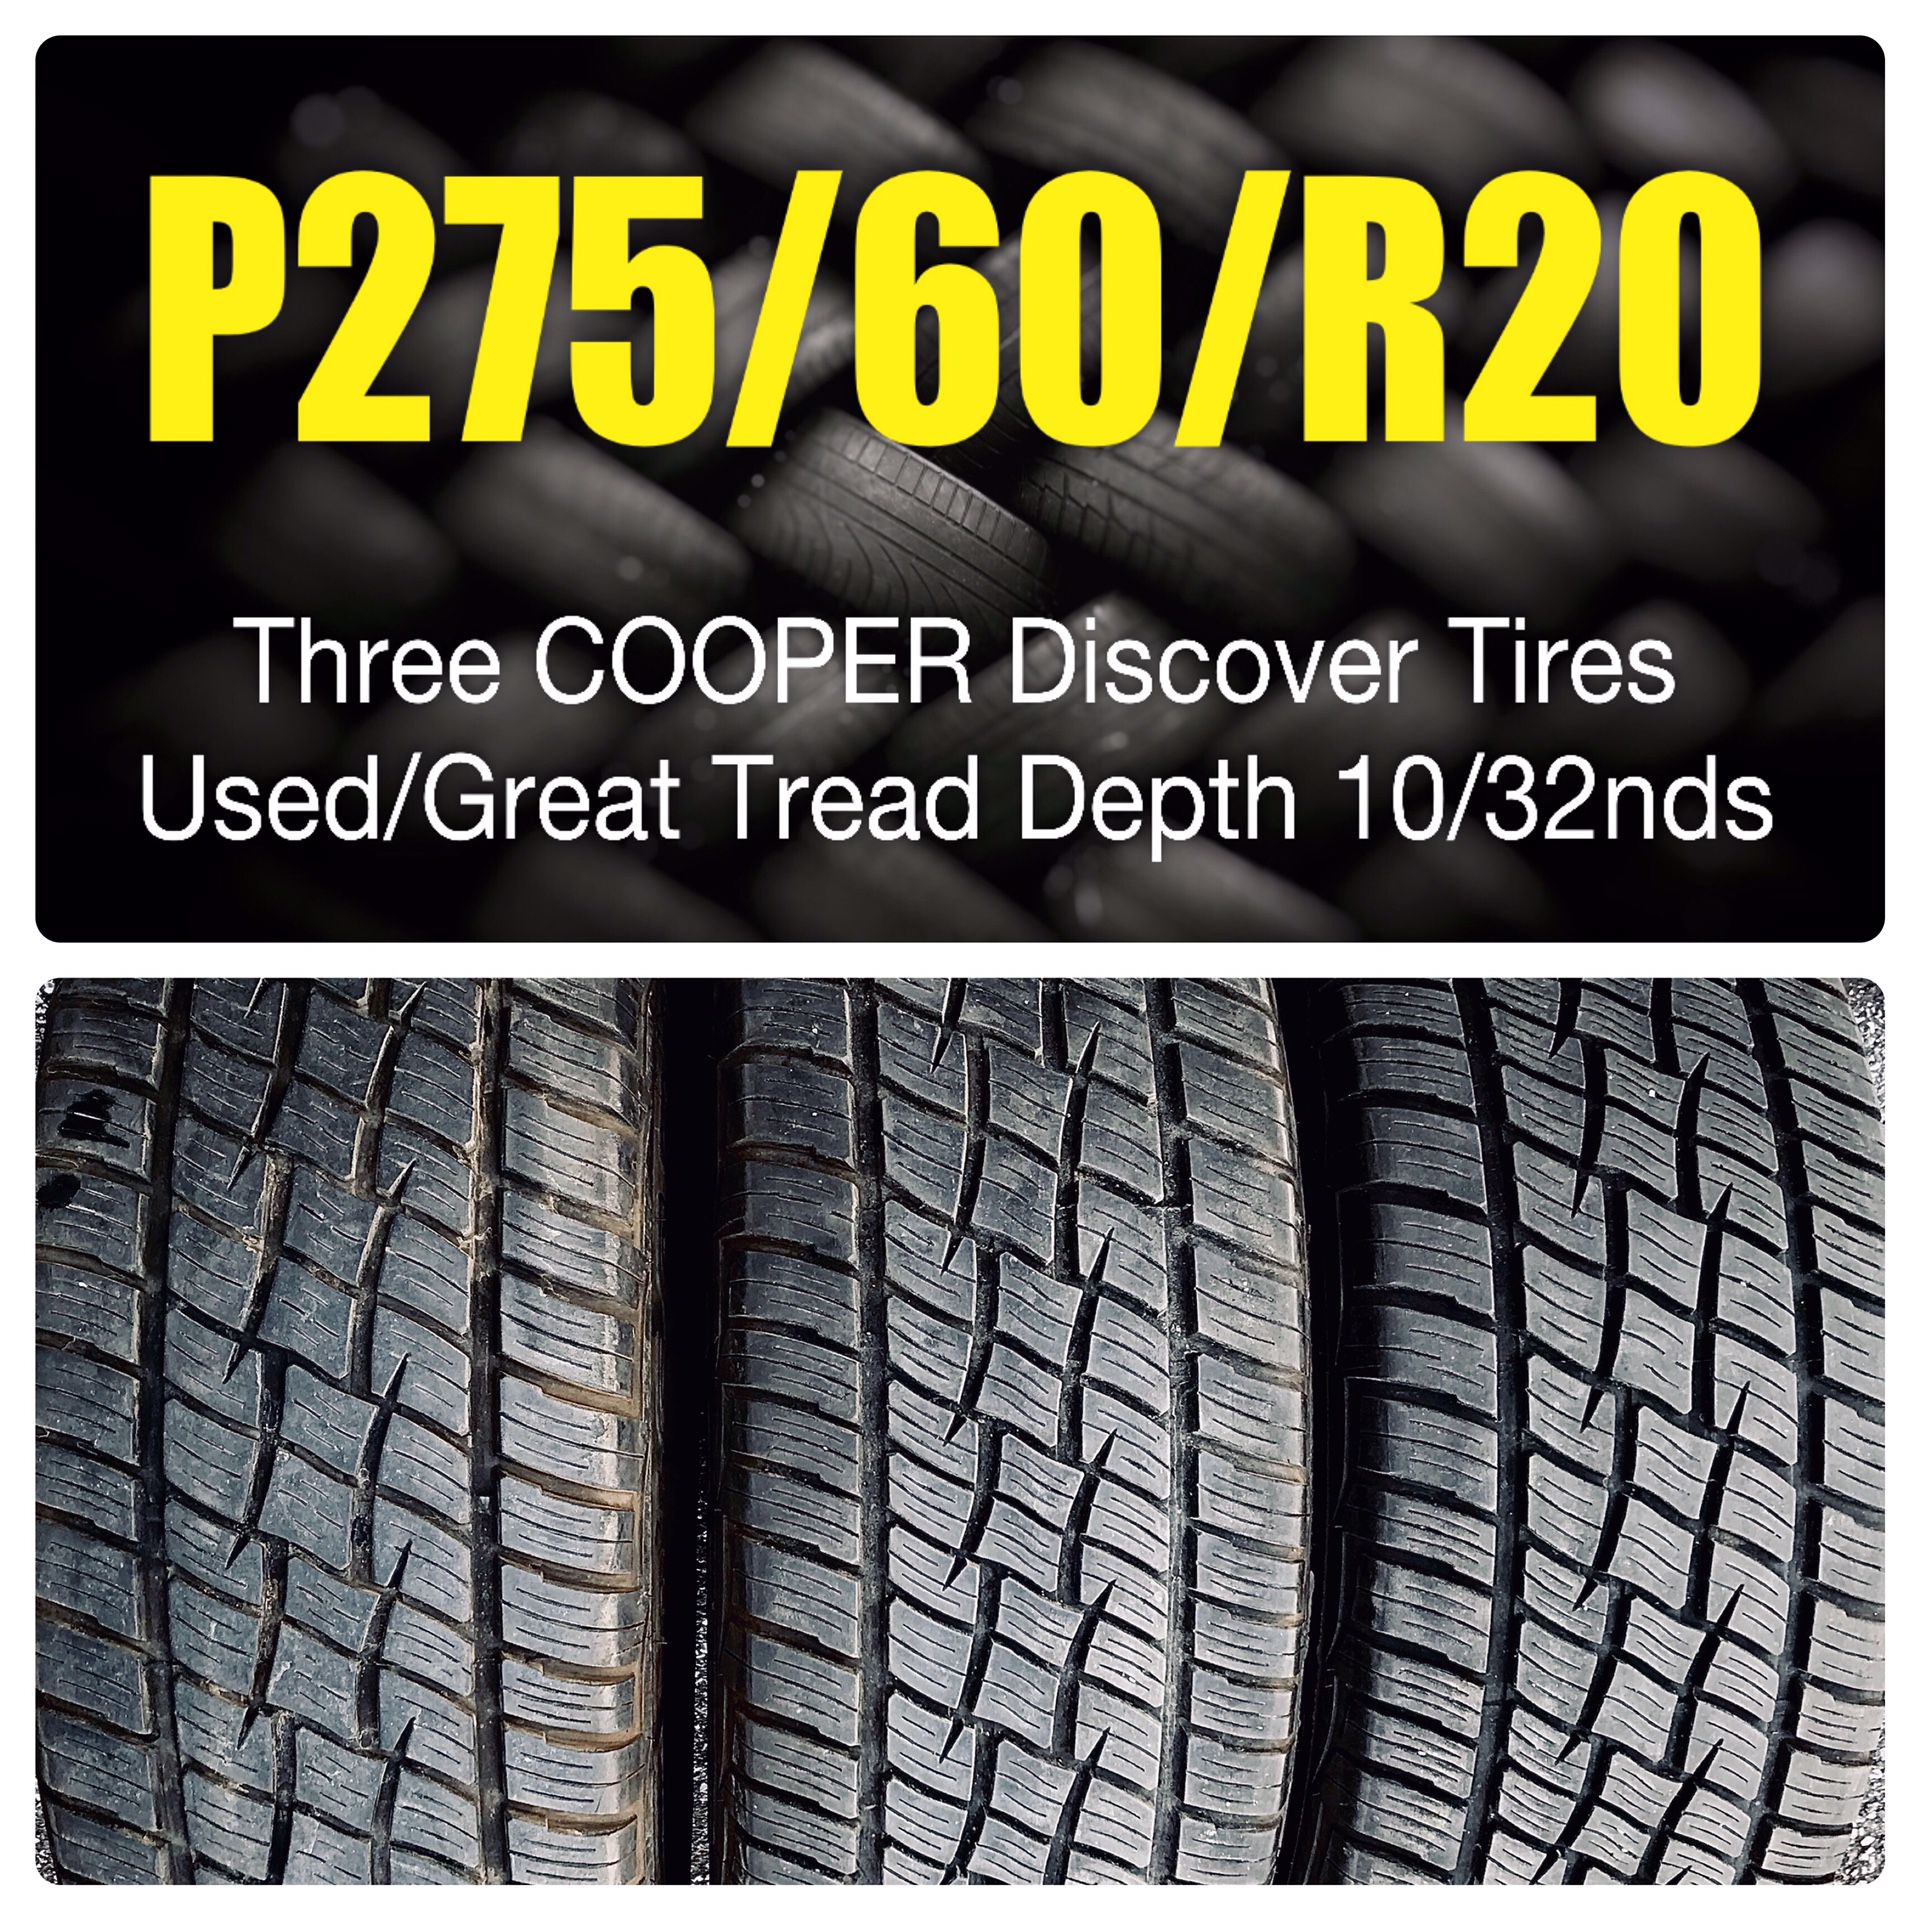 P275/60/R20 Three COOPER Discover Tires